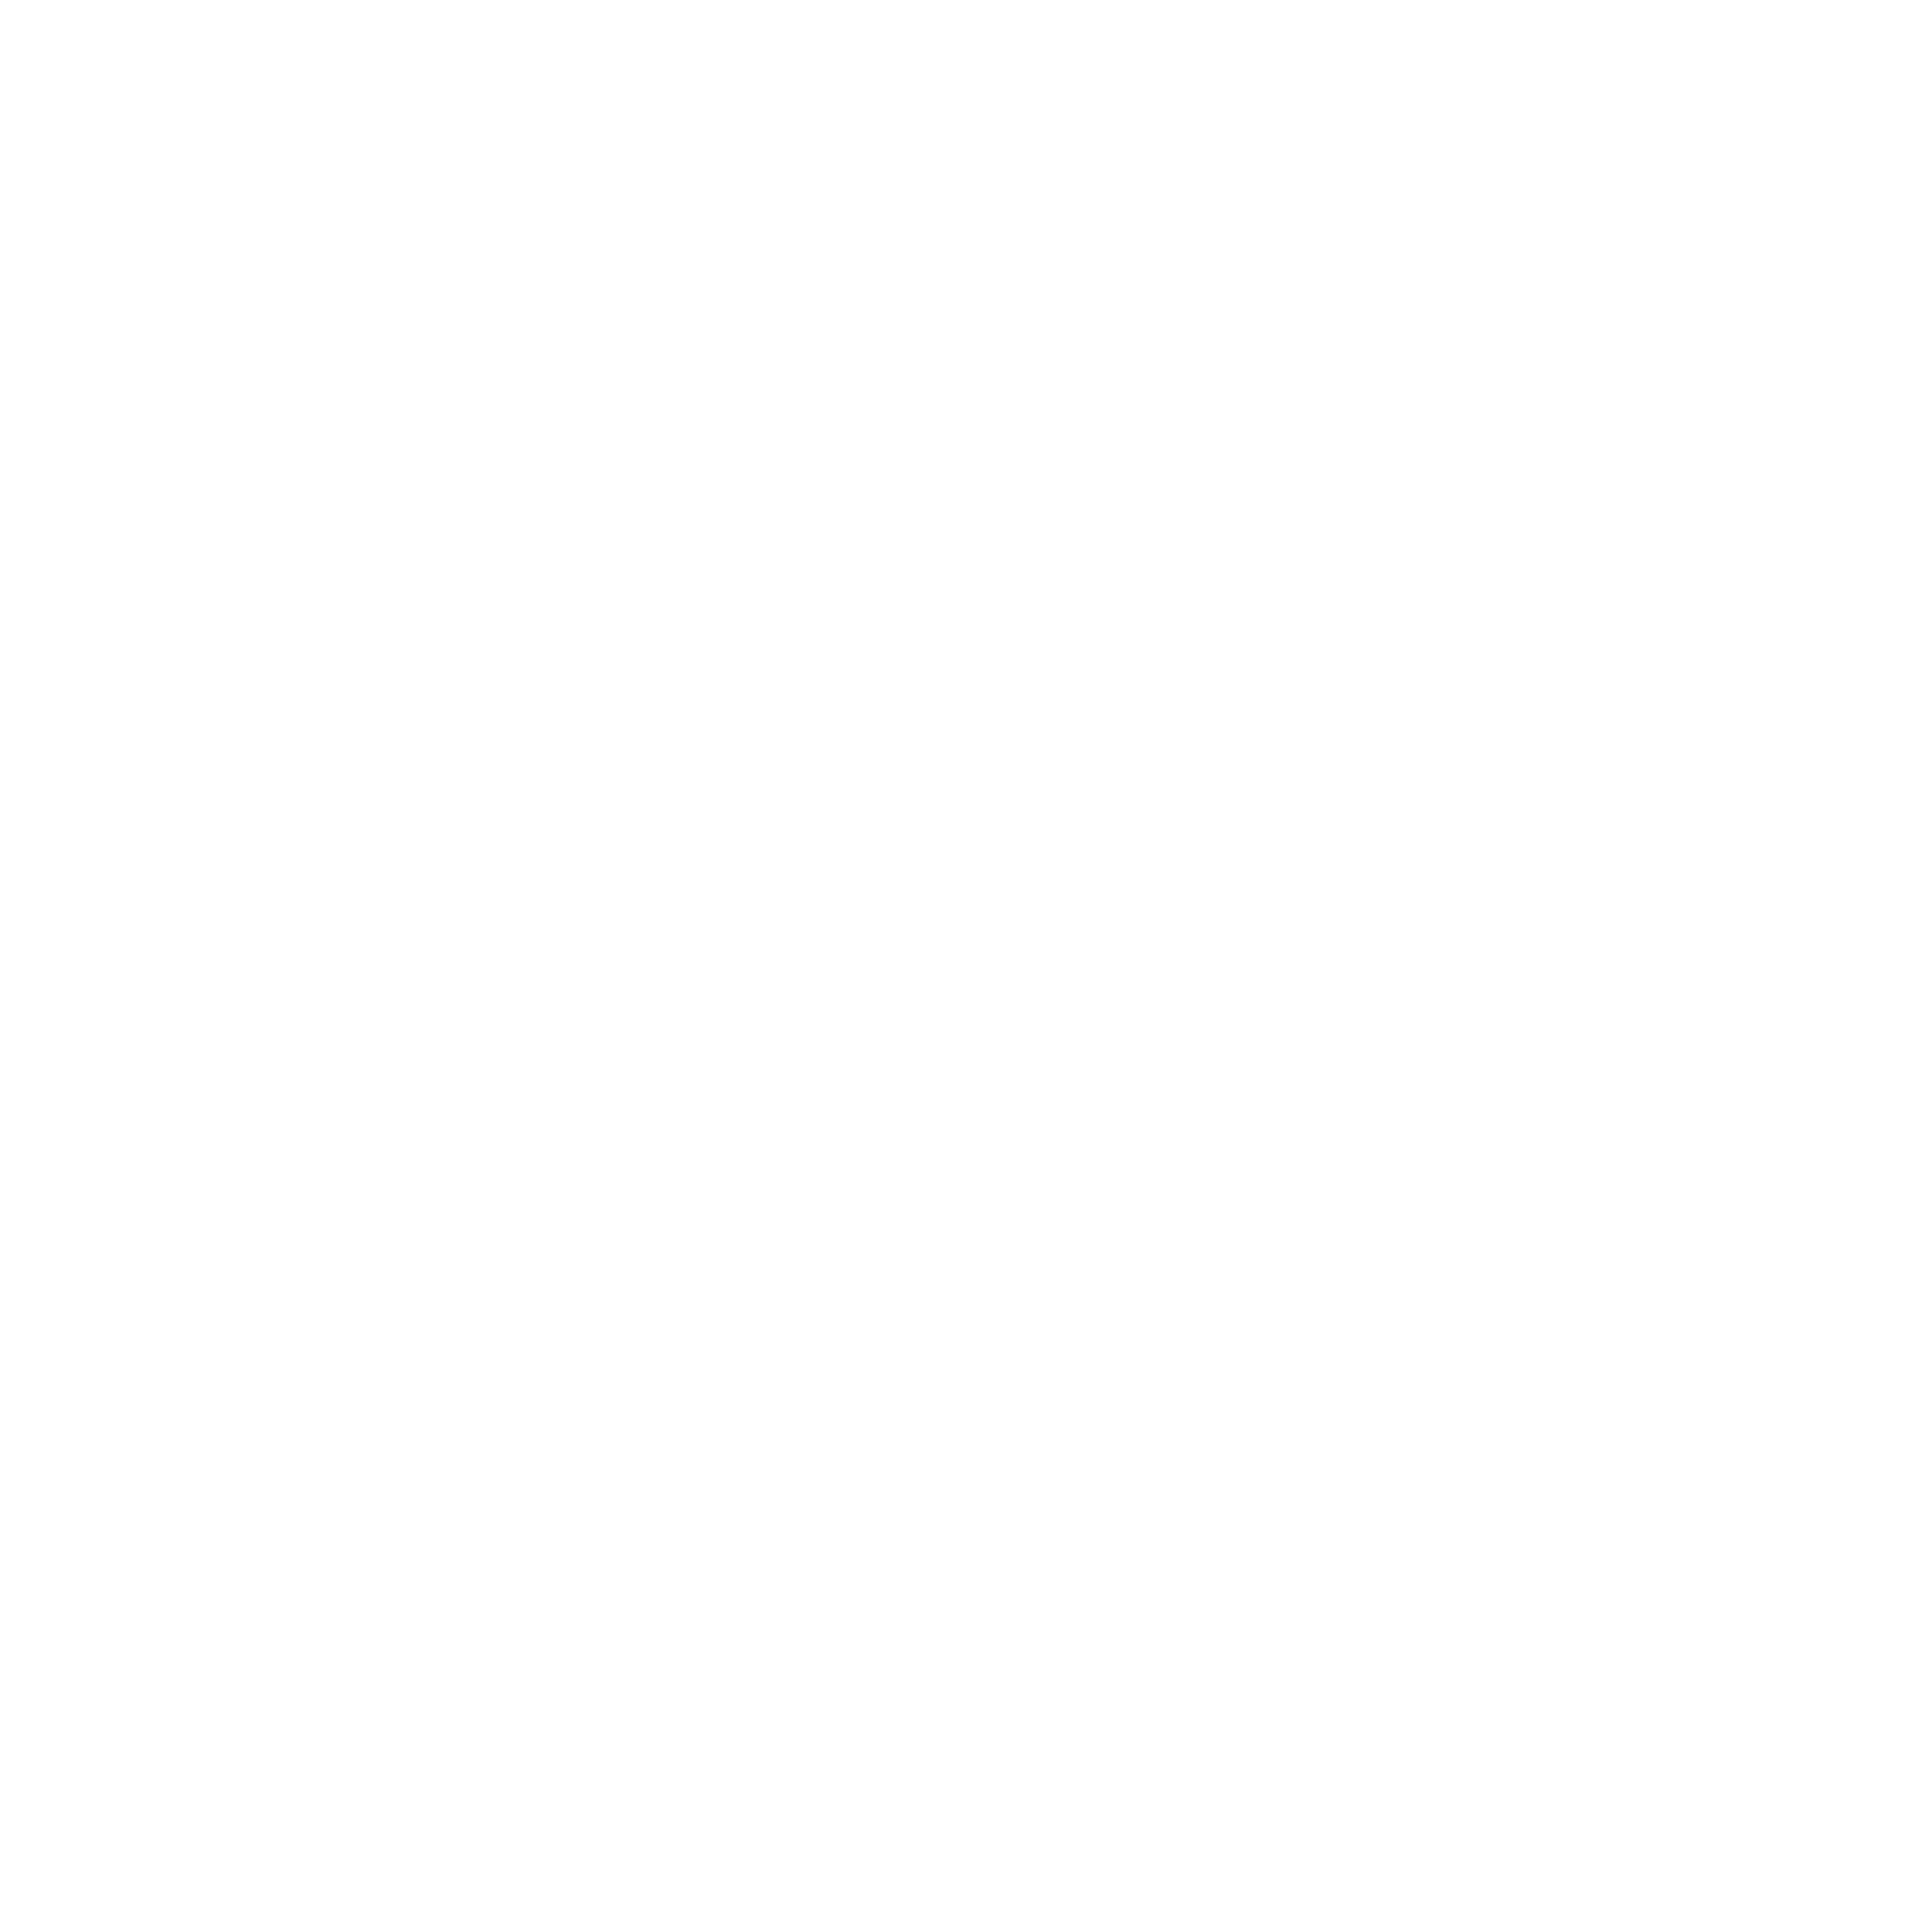 Beth Goldwaterh